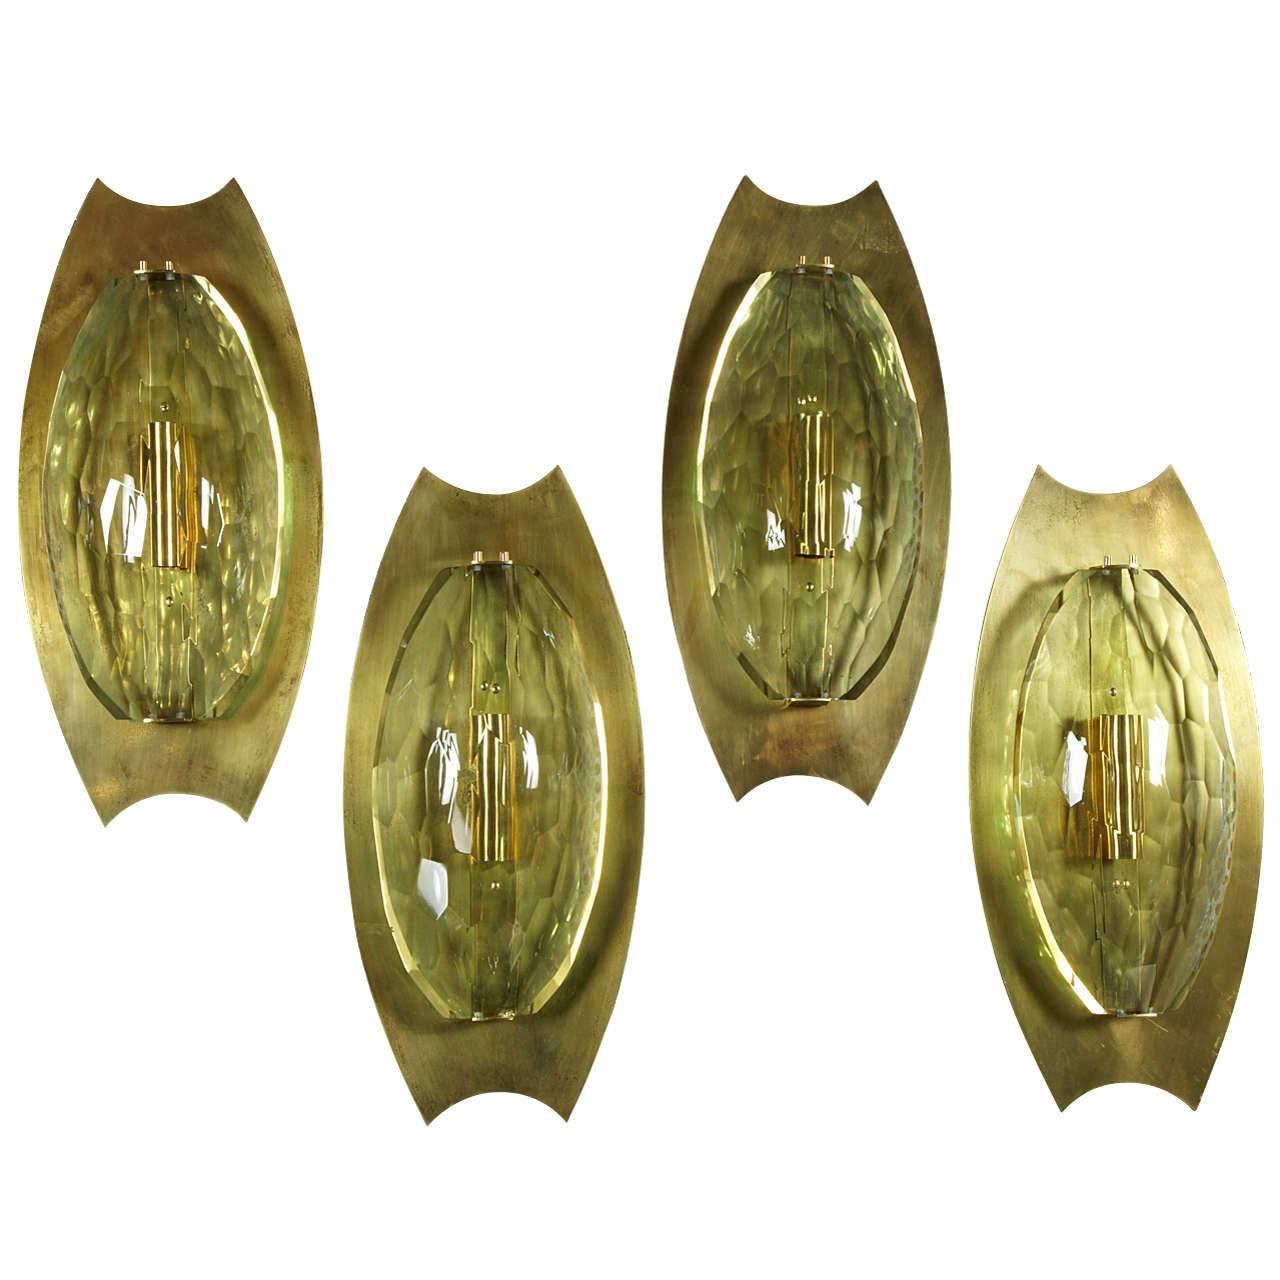 Fantastic Pair of Murano Glass Sconces Attributed to Fontana Arté